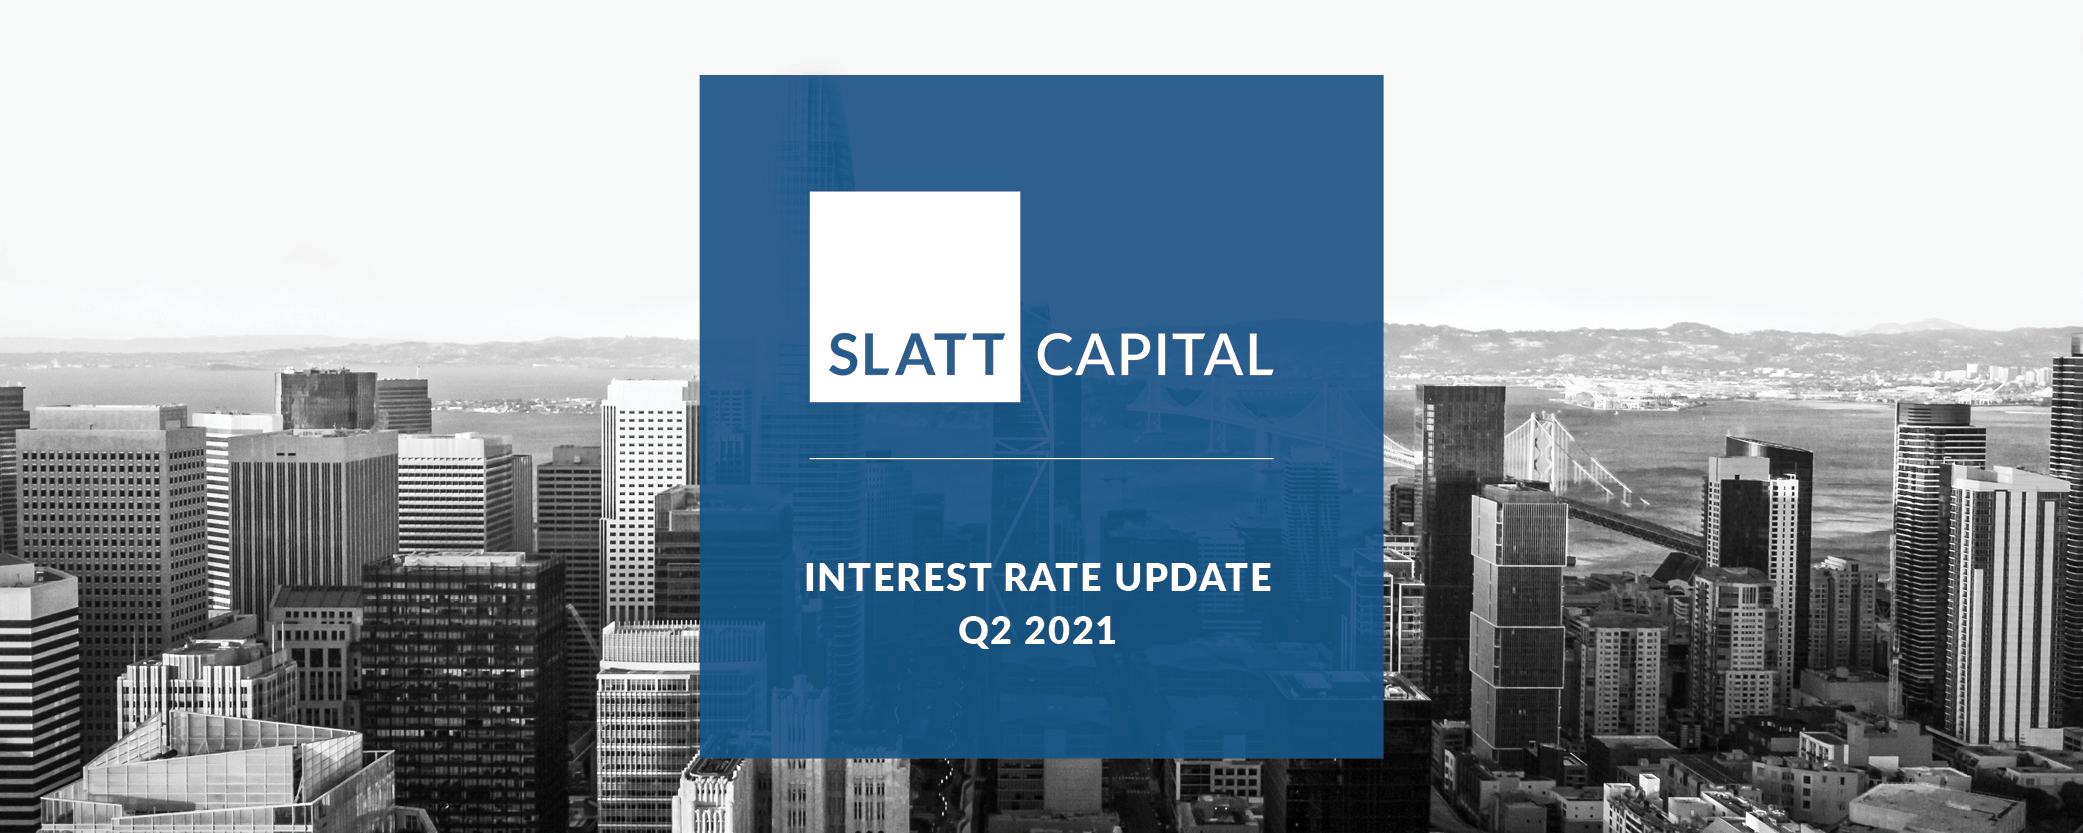 Interest Rate Update Q2 2021